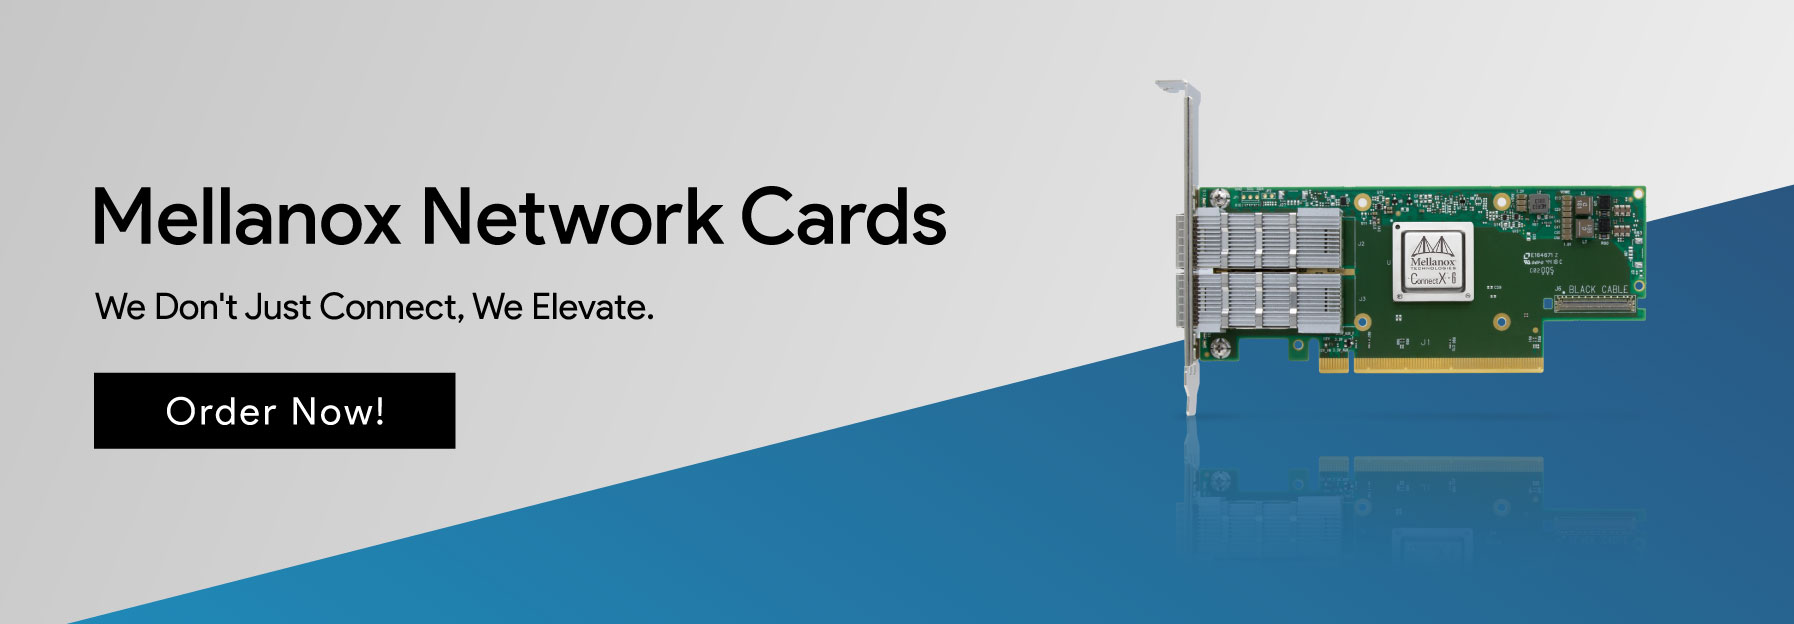 mellanox network cards